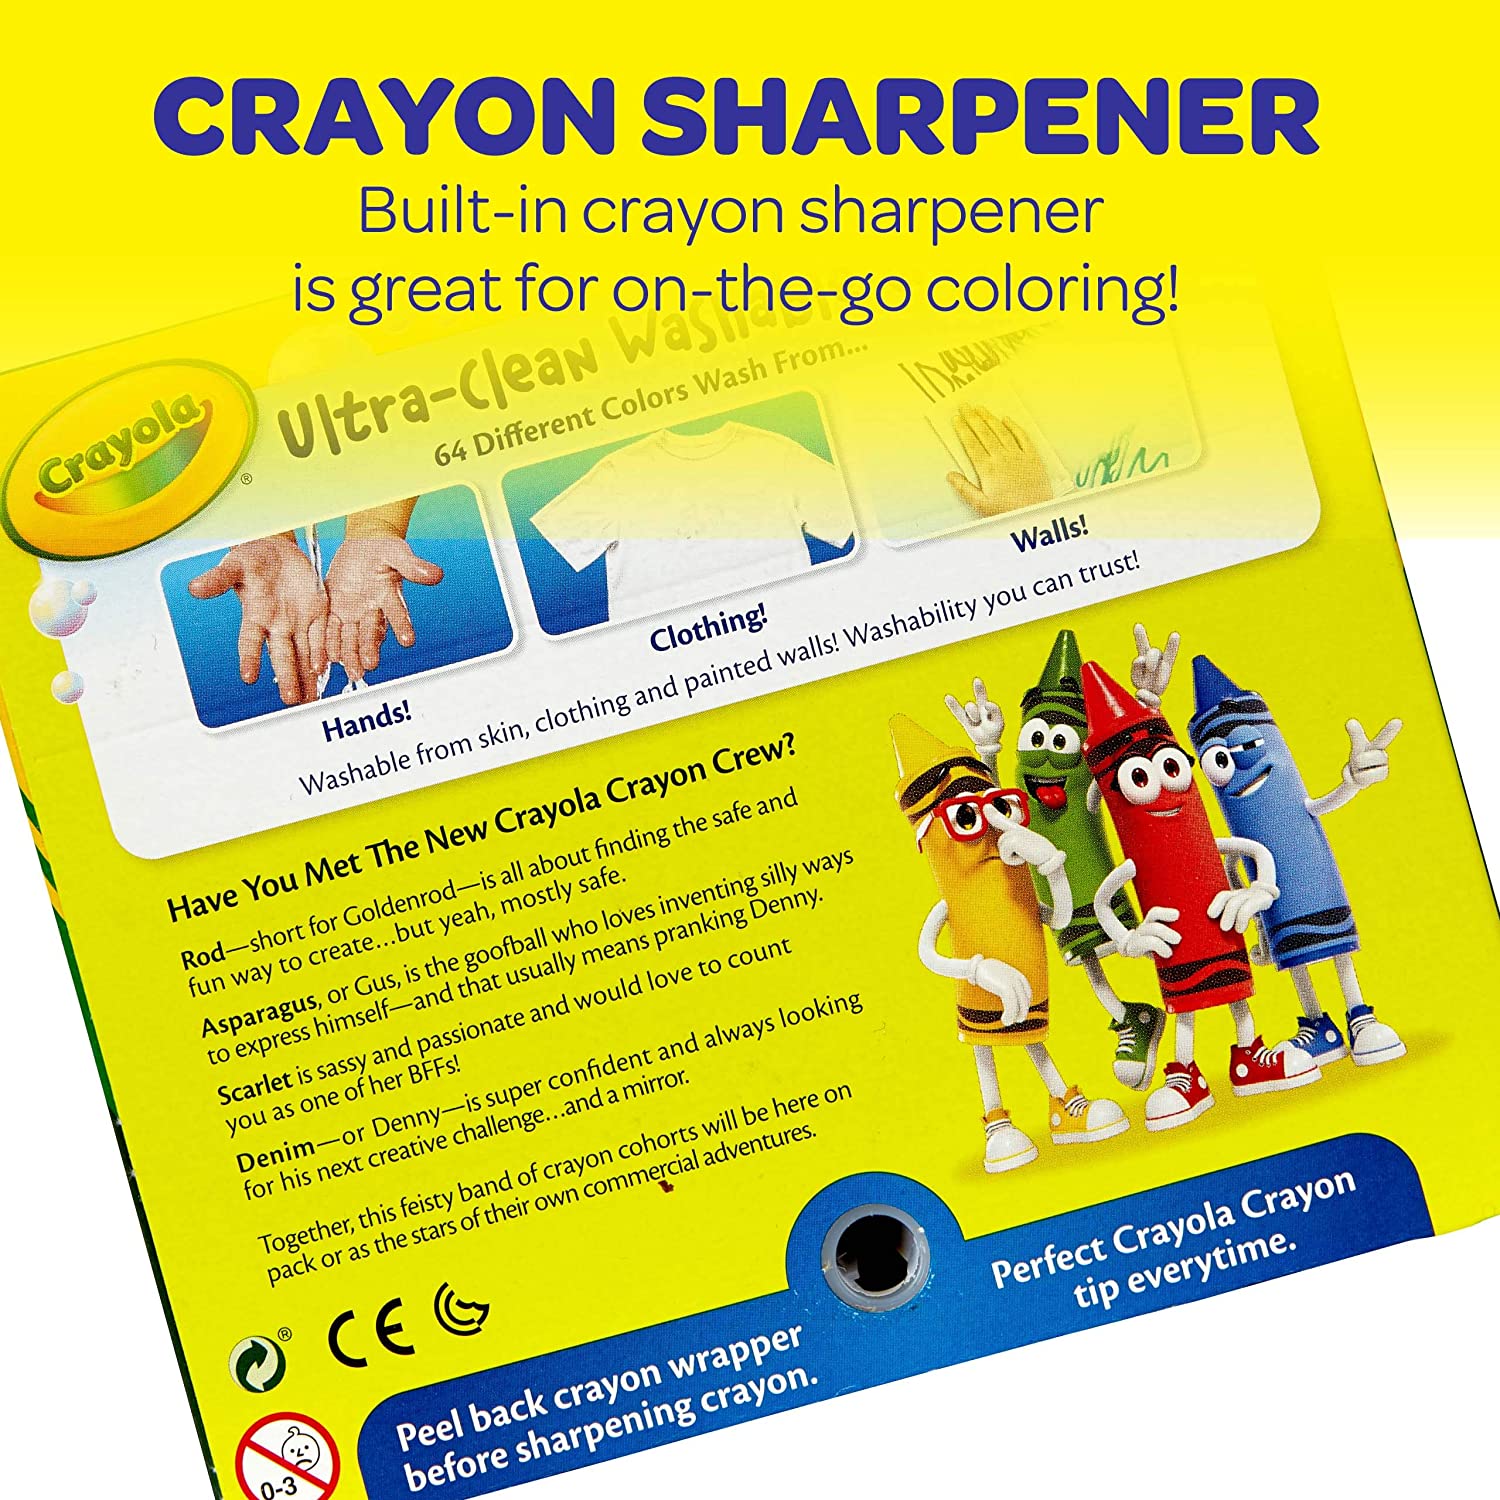 Crayola Ultra-Clean Washable Crayons - 64 Count